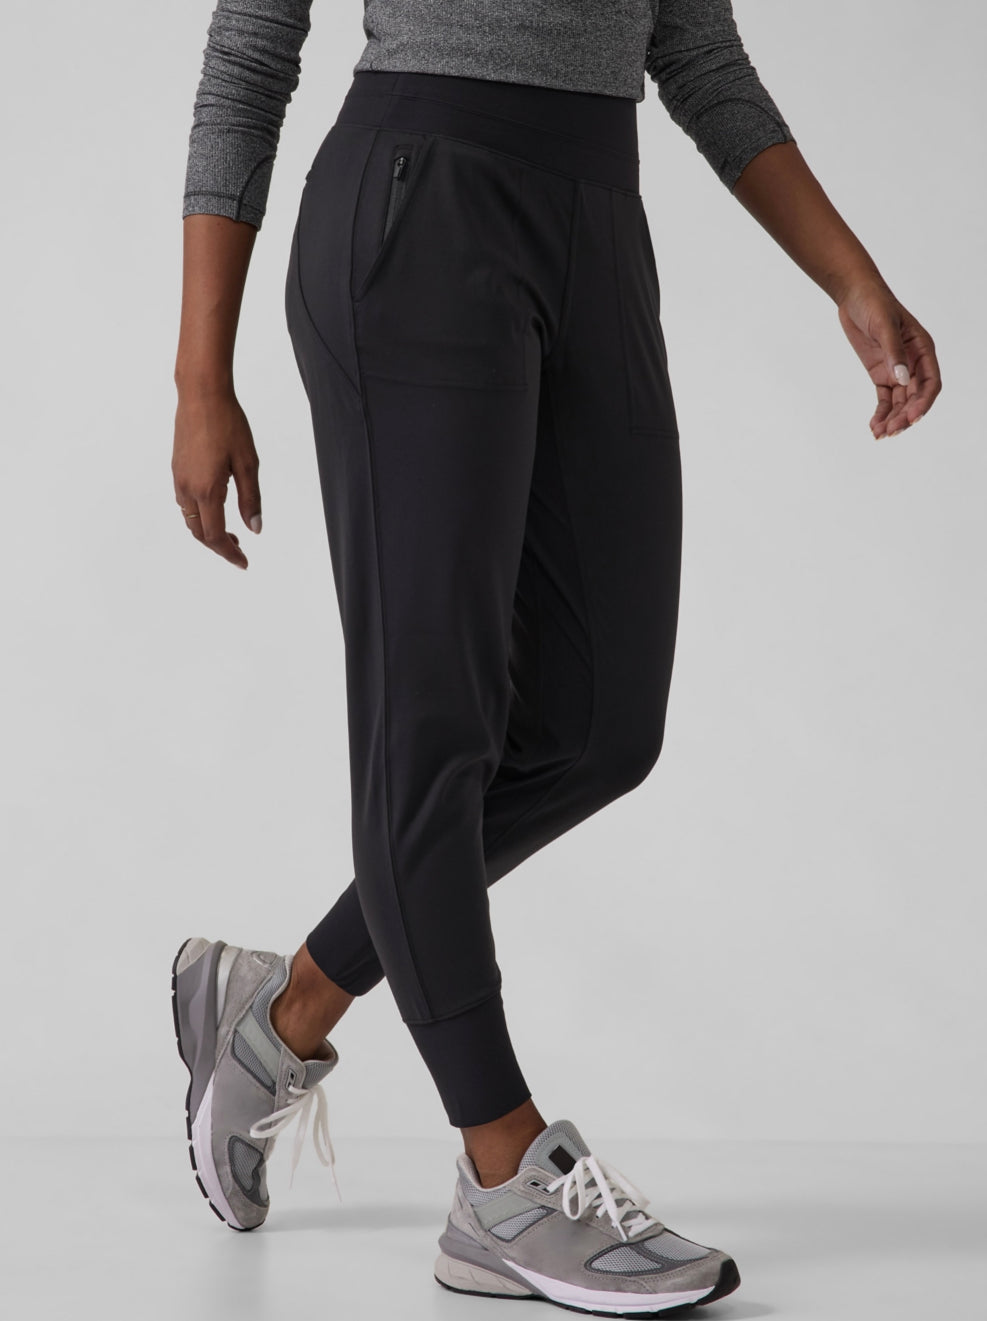 Athleta Venice Jogger black comfort stretch women's Sz Xs petite